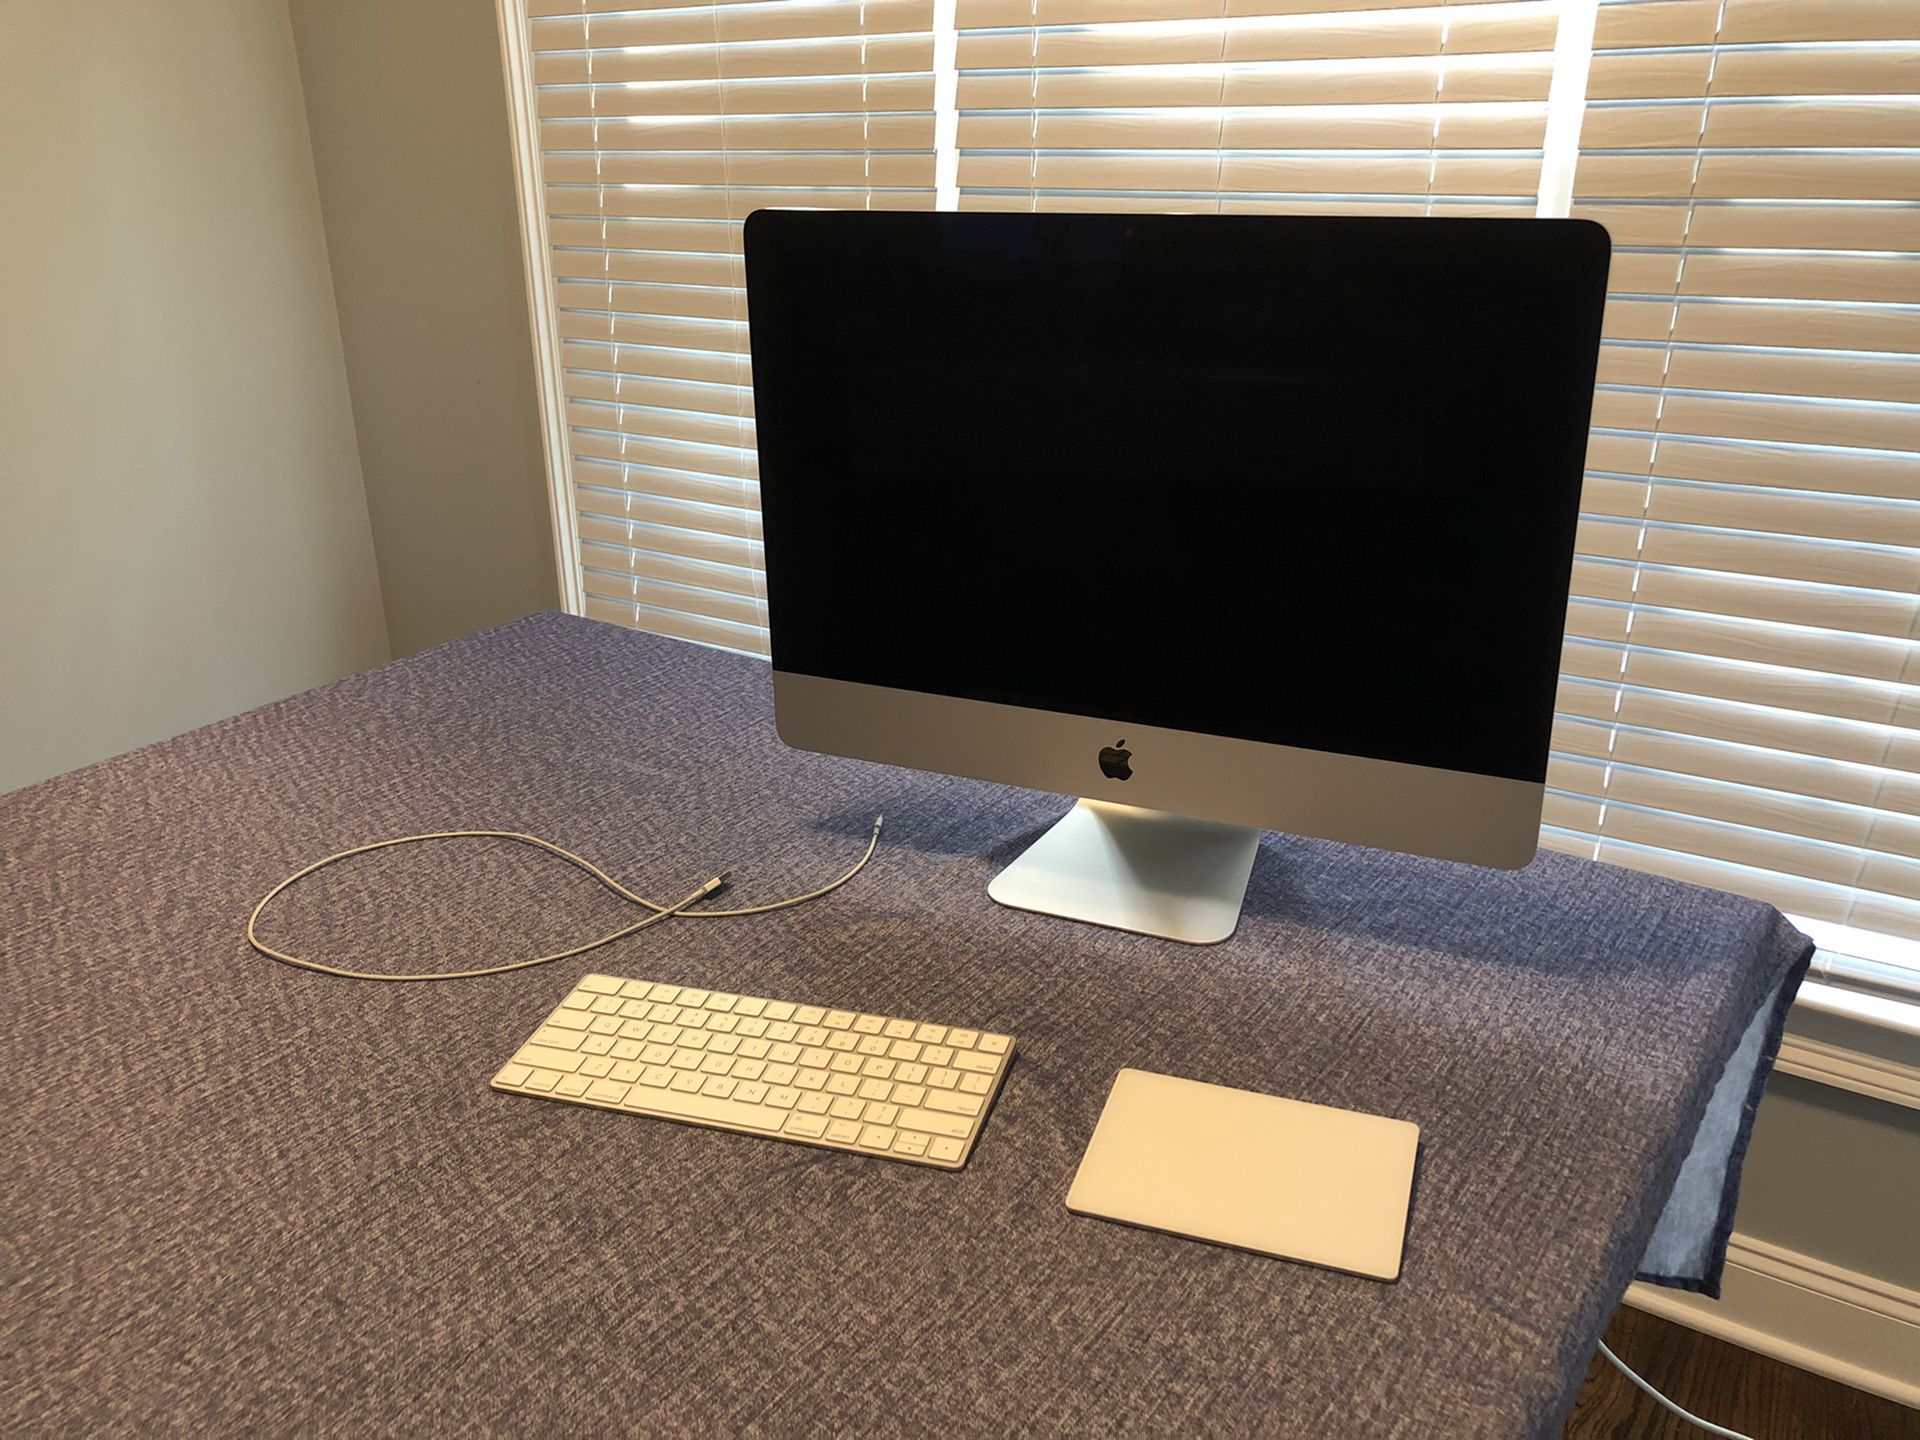 Like new 21.5” iMac 1TB hard drive with new wireless keyboard and trackpad